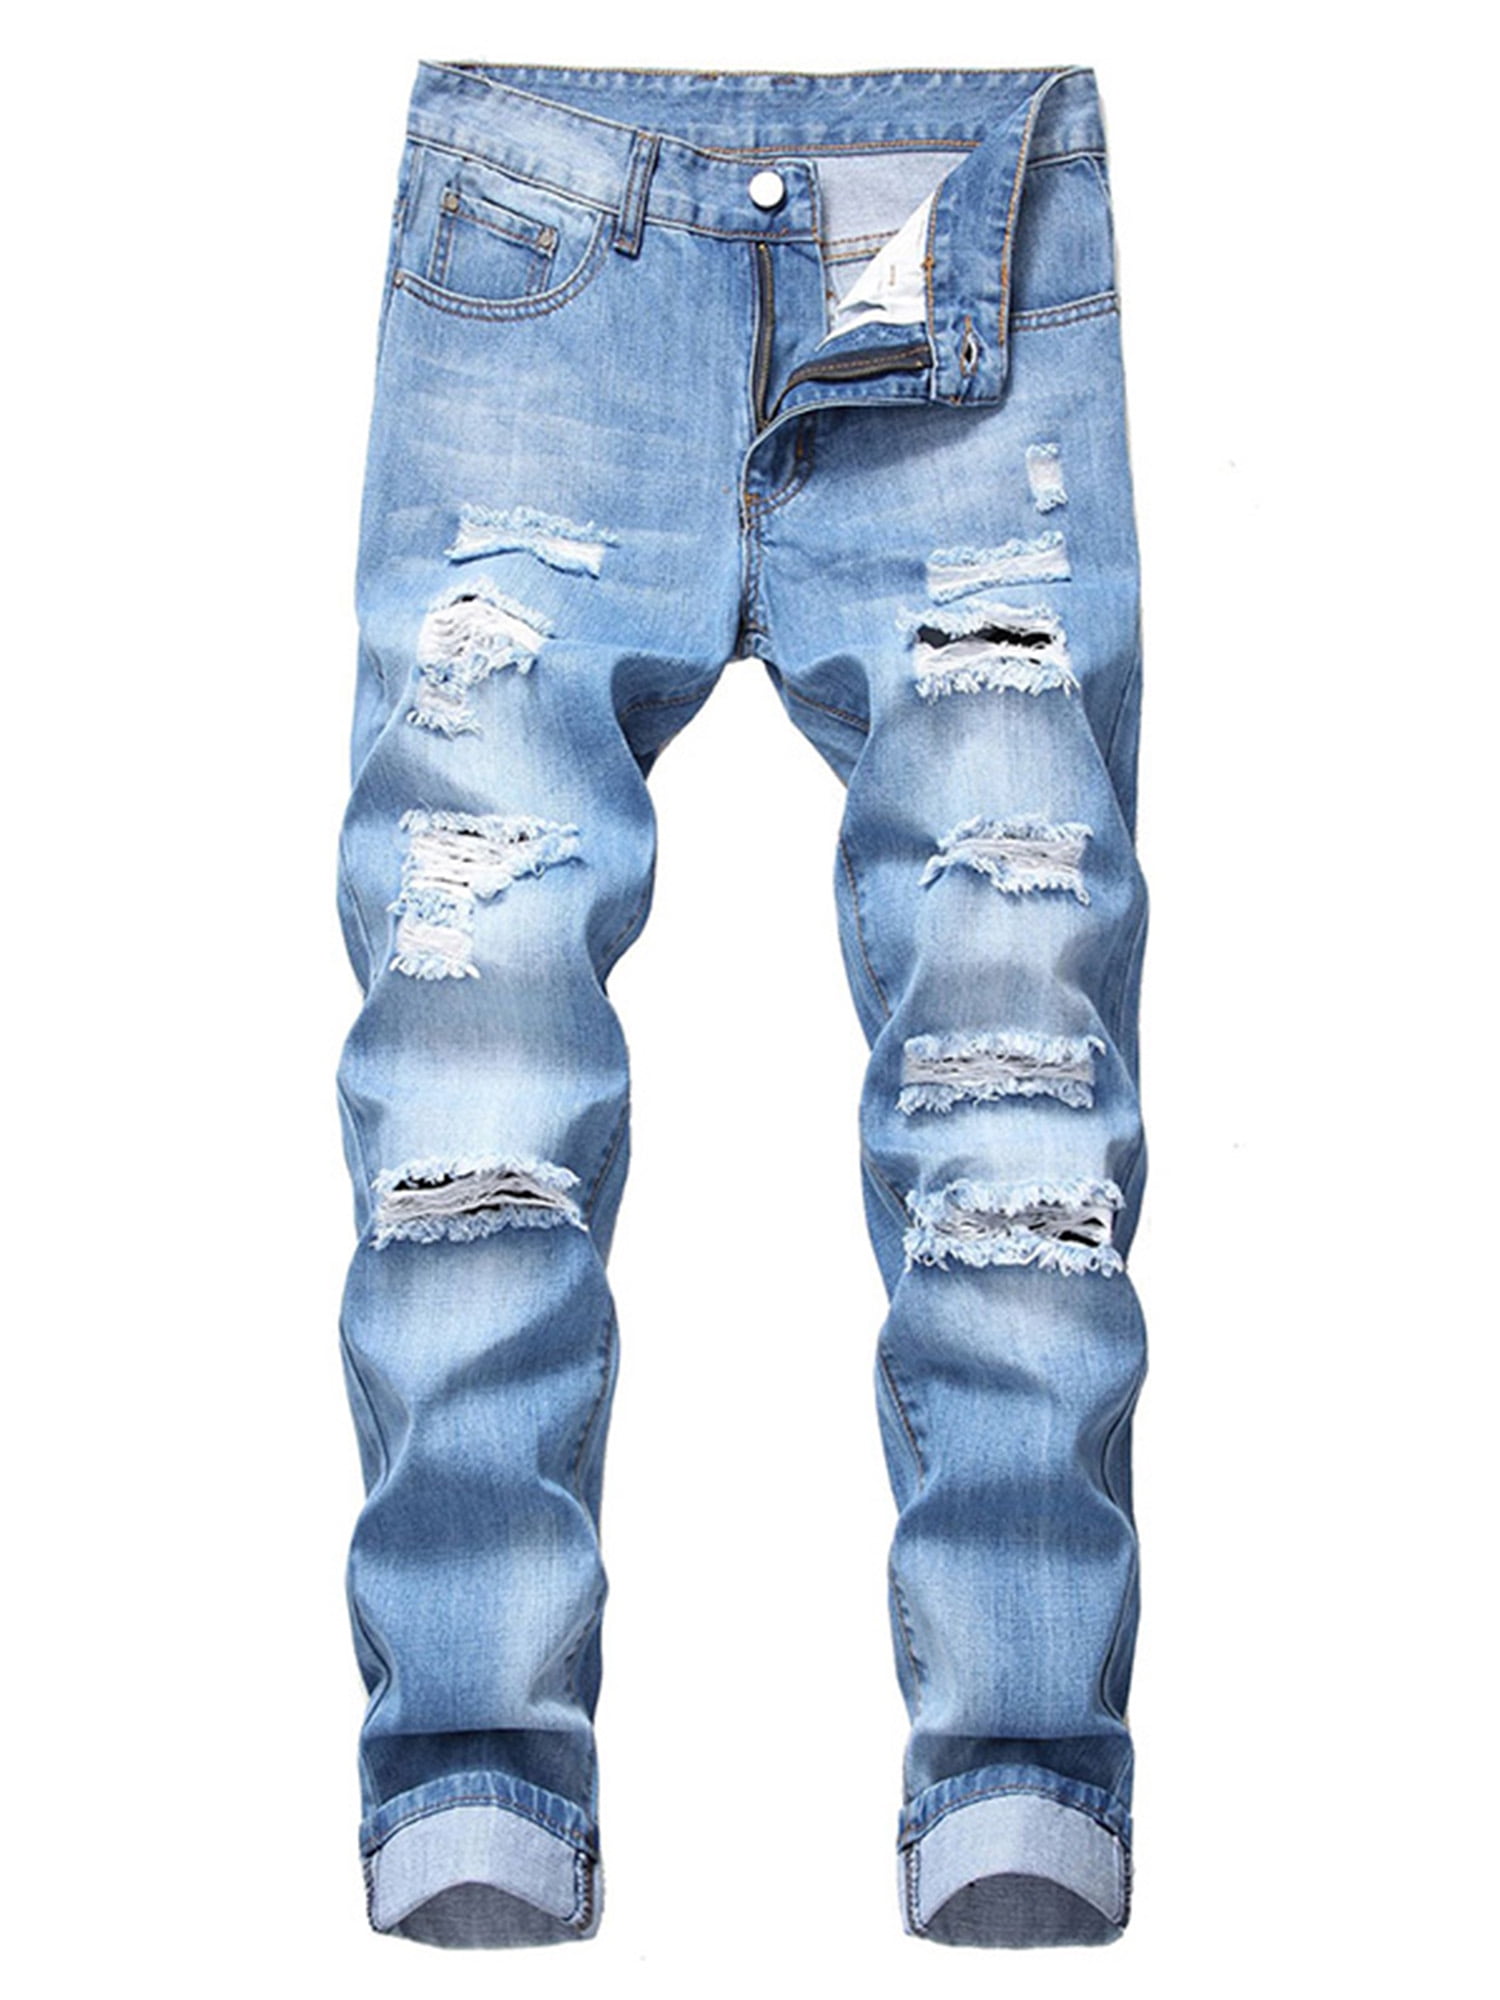 For Men Bulk Wholesale Jean Pants| Alibaba.com